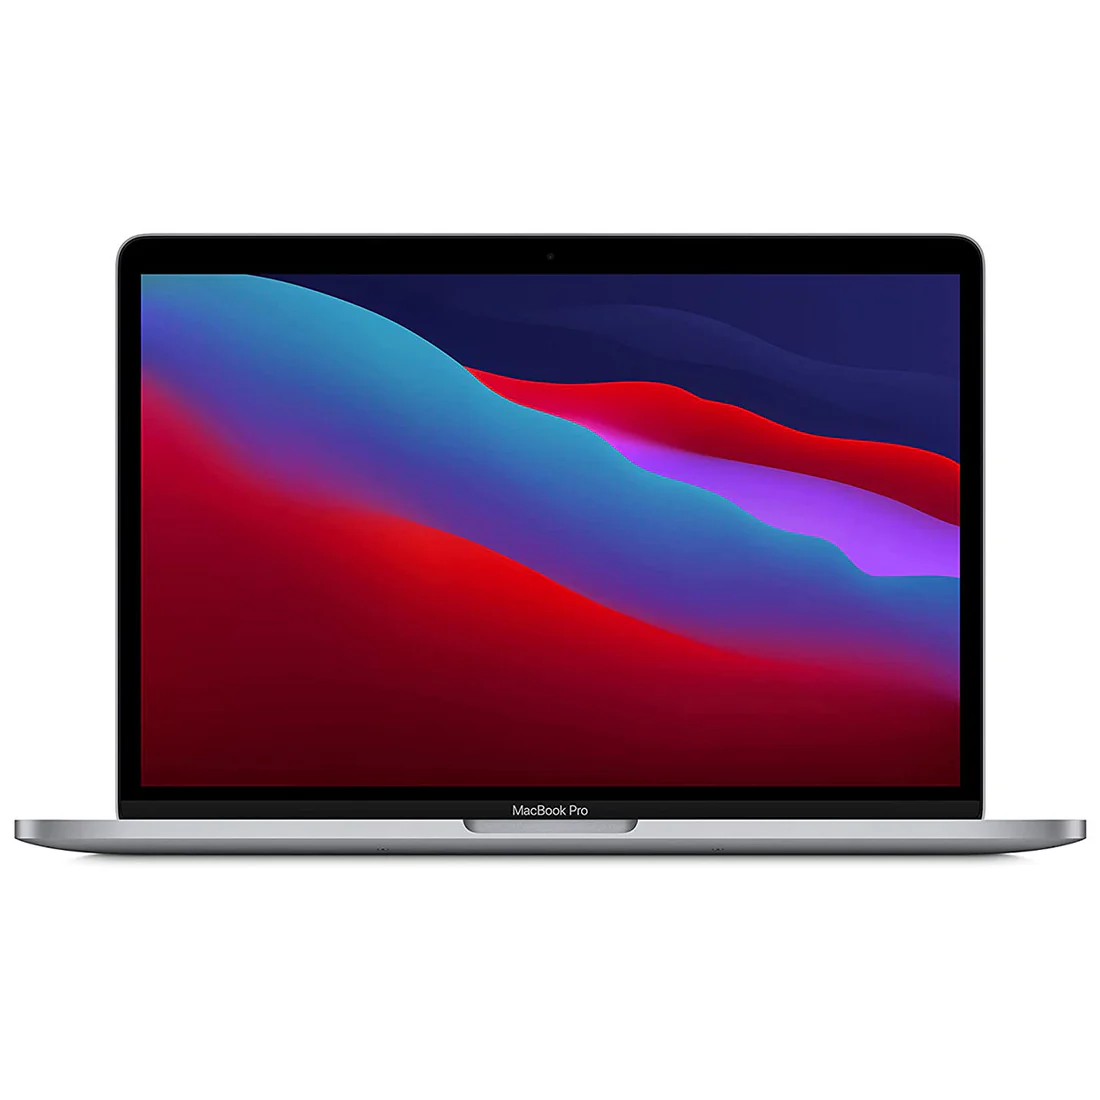 MacBook Air a2337 M1-2020 8 GB RAM 256 GB SSD 